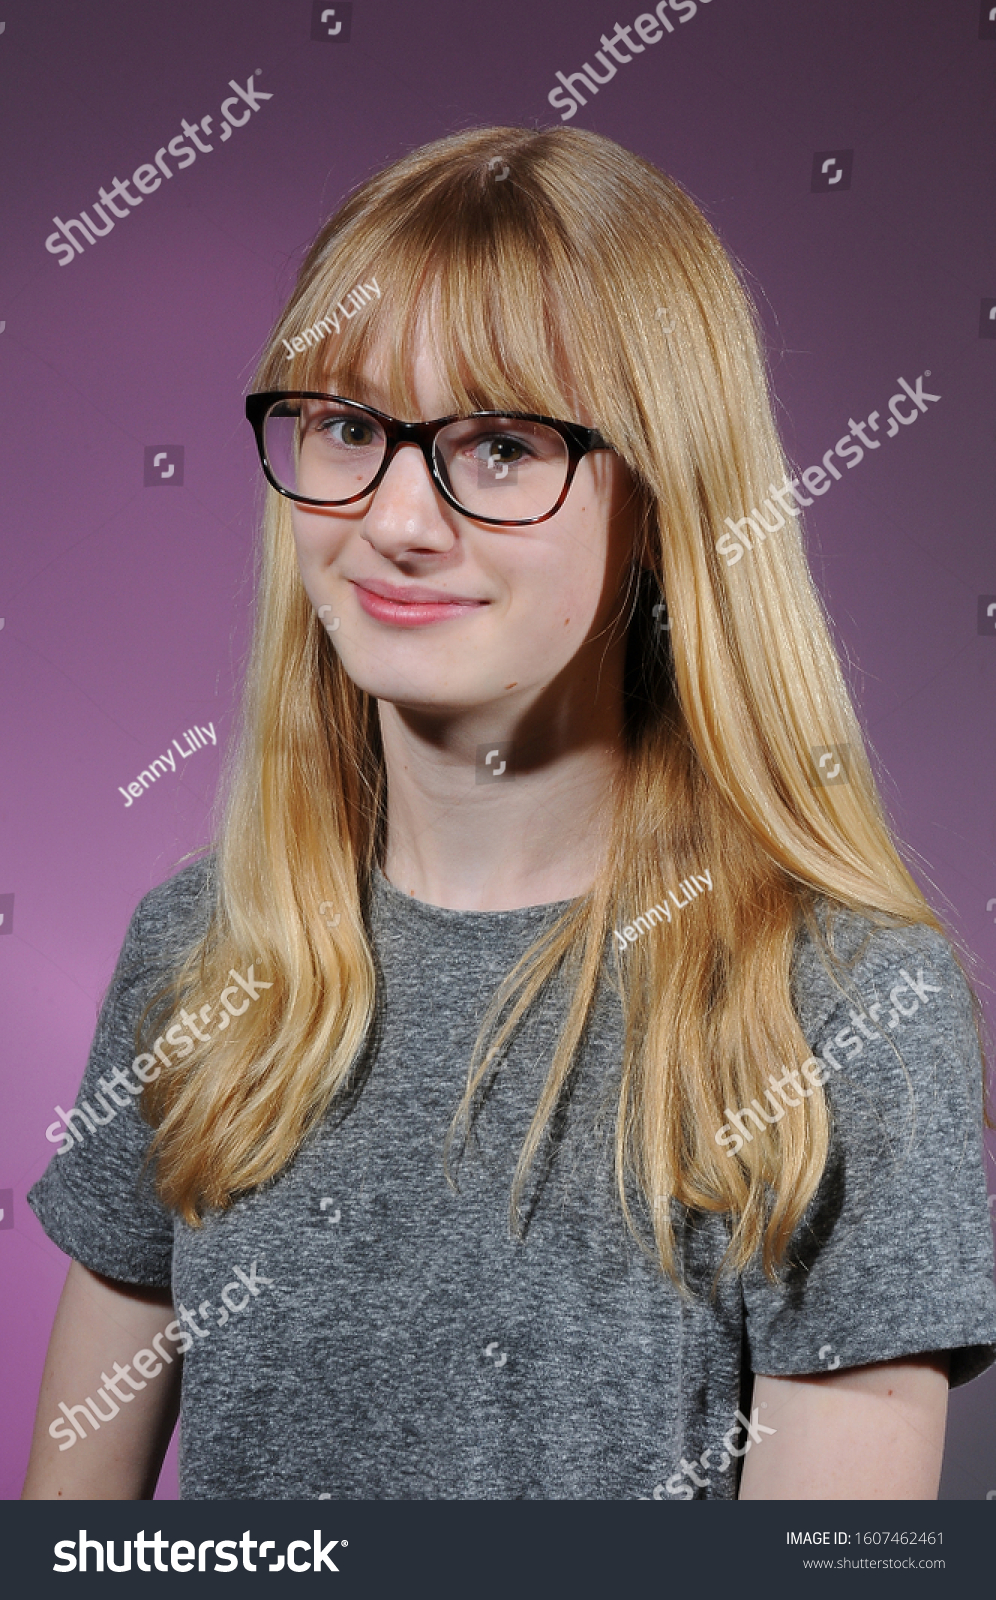 cute blonde teen glasses